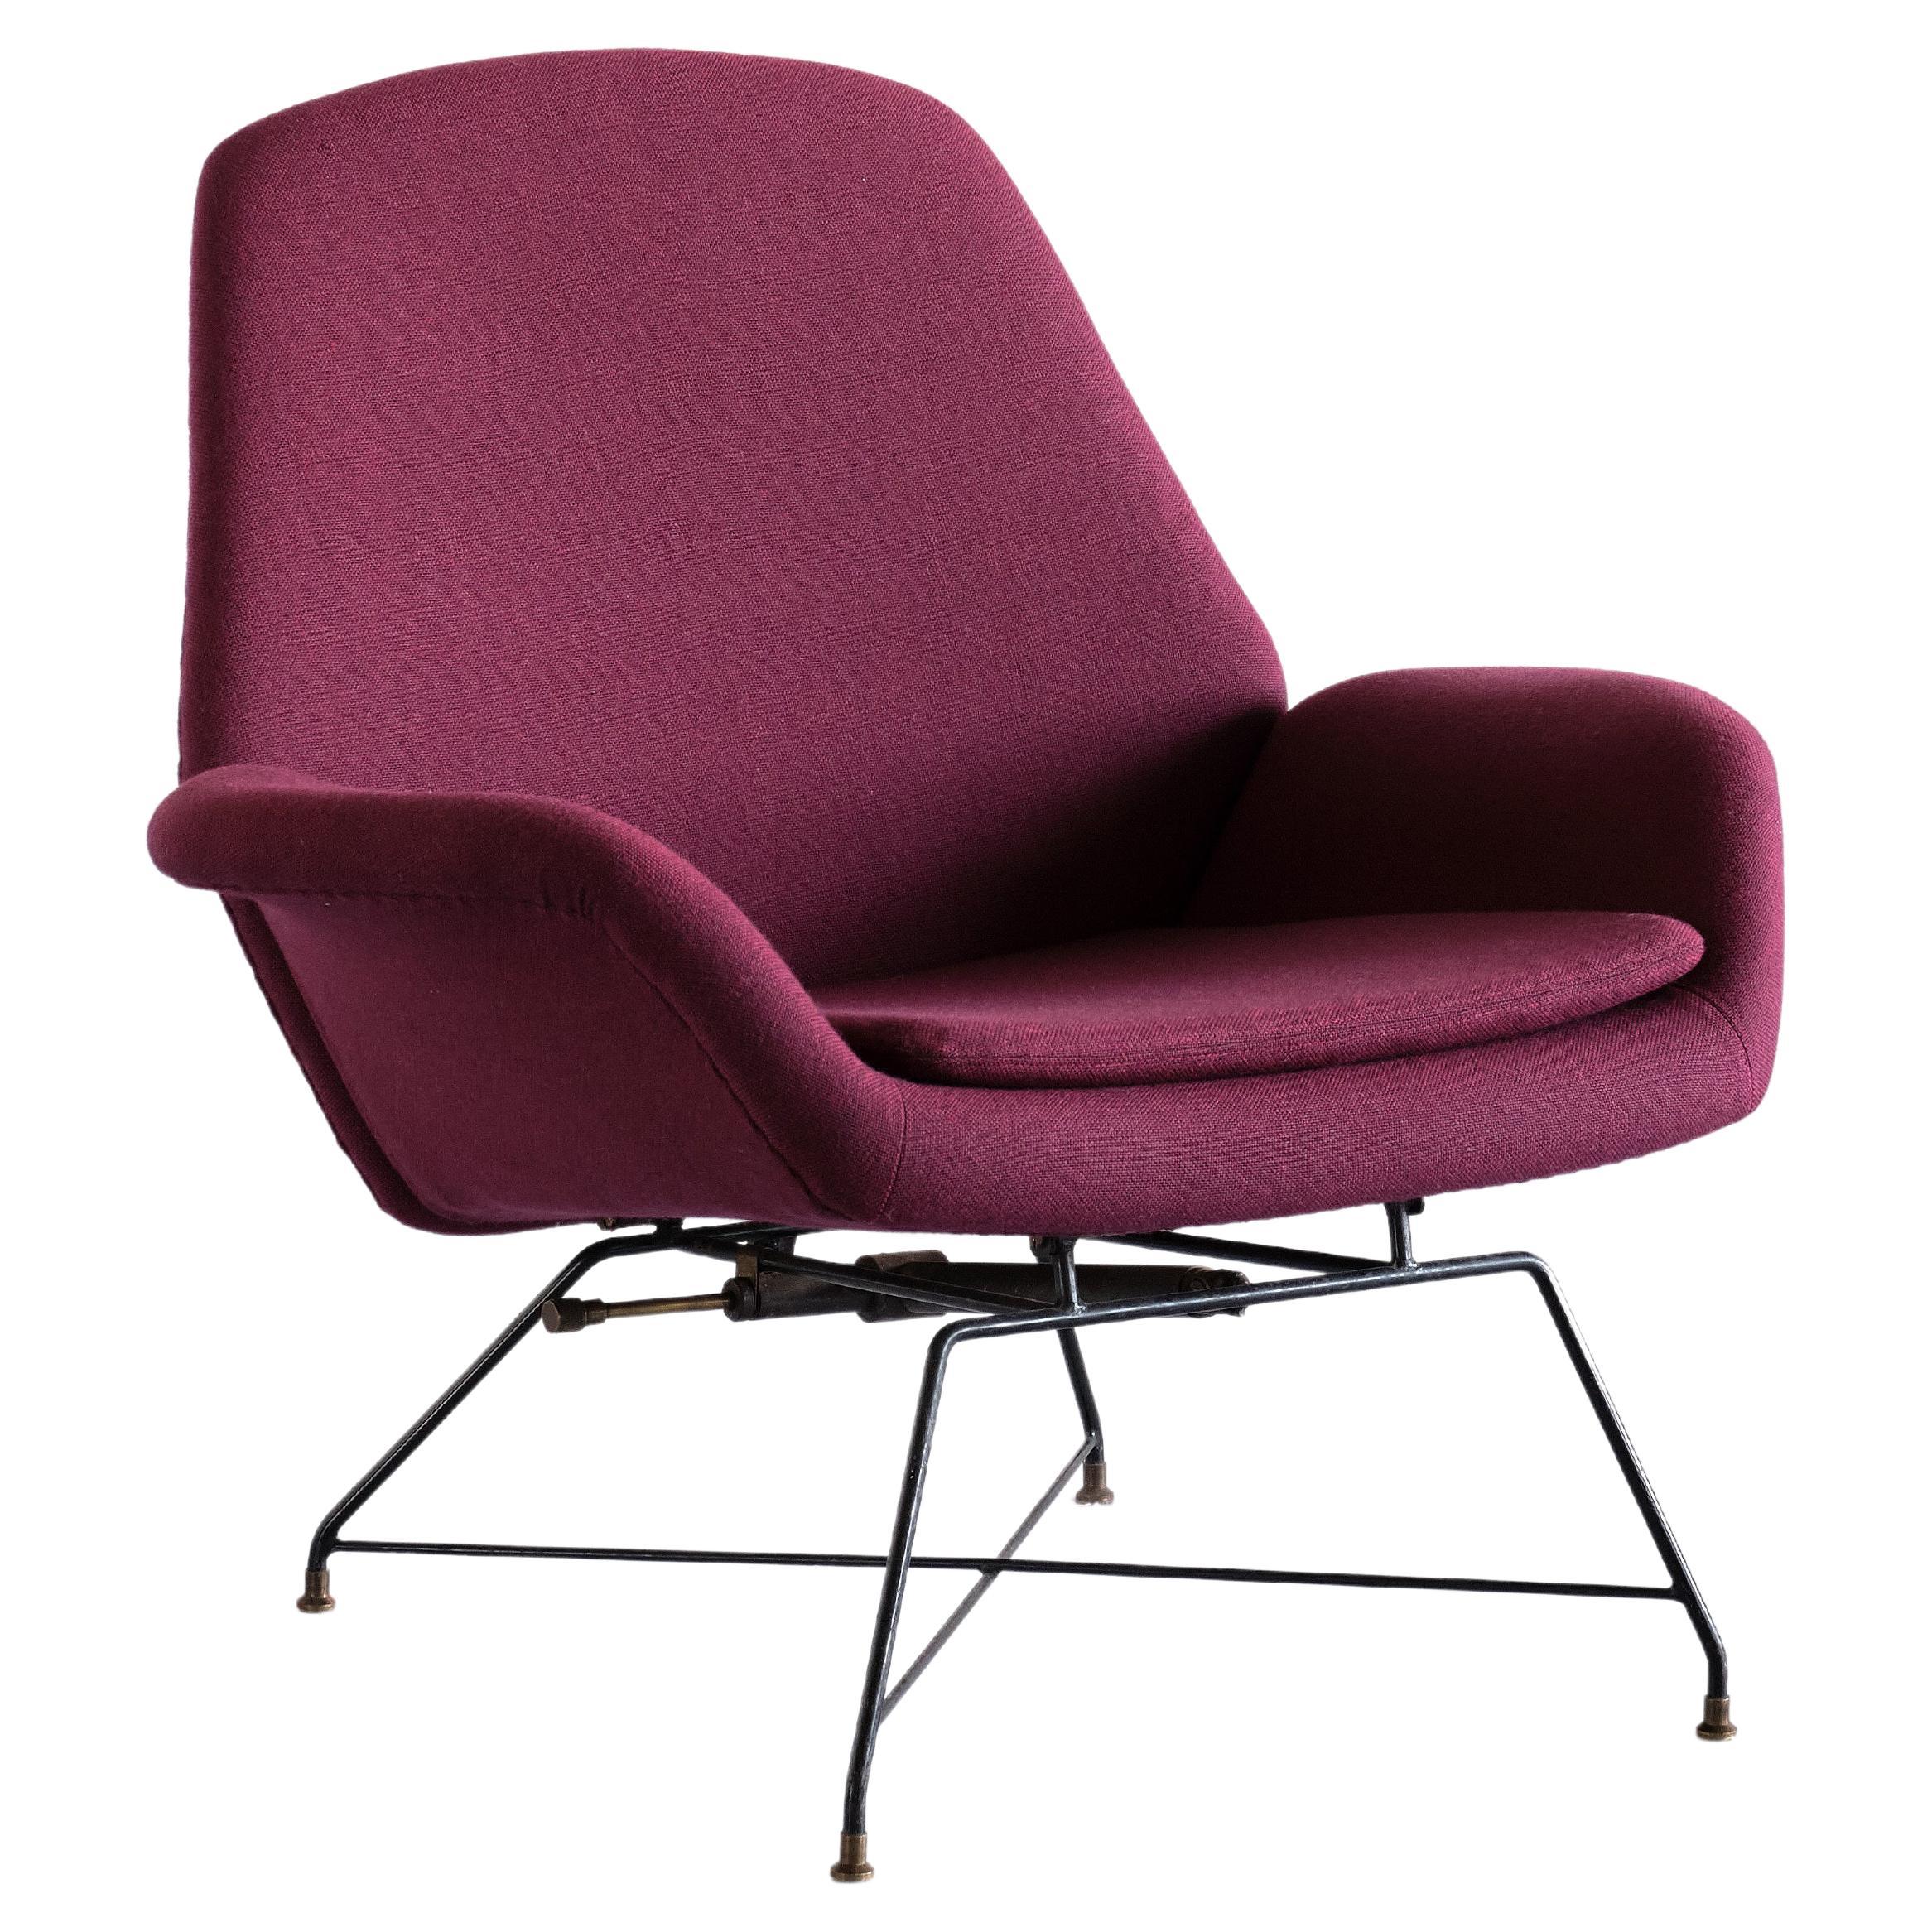 Augusto Bozzi 'Lotus' Adjustable Lounge Chair, Saporiti, Italy, 1960s For Sale